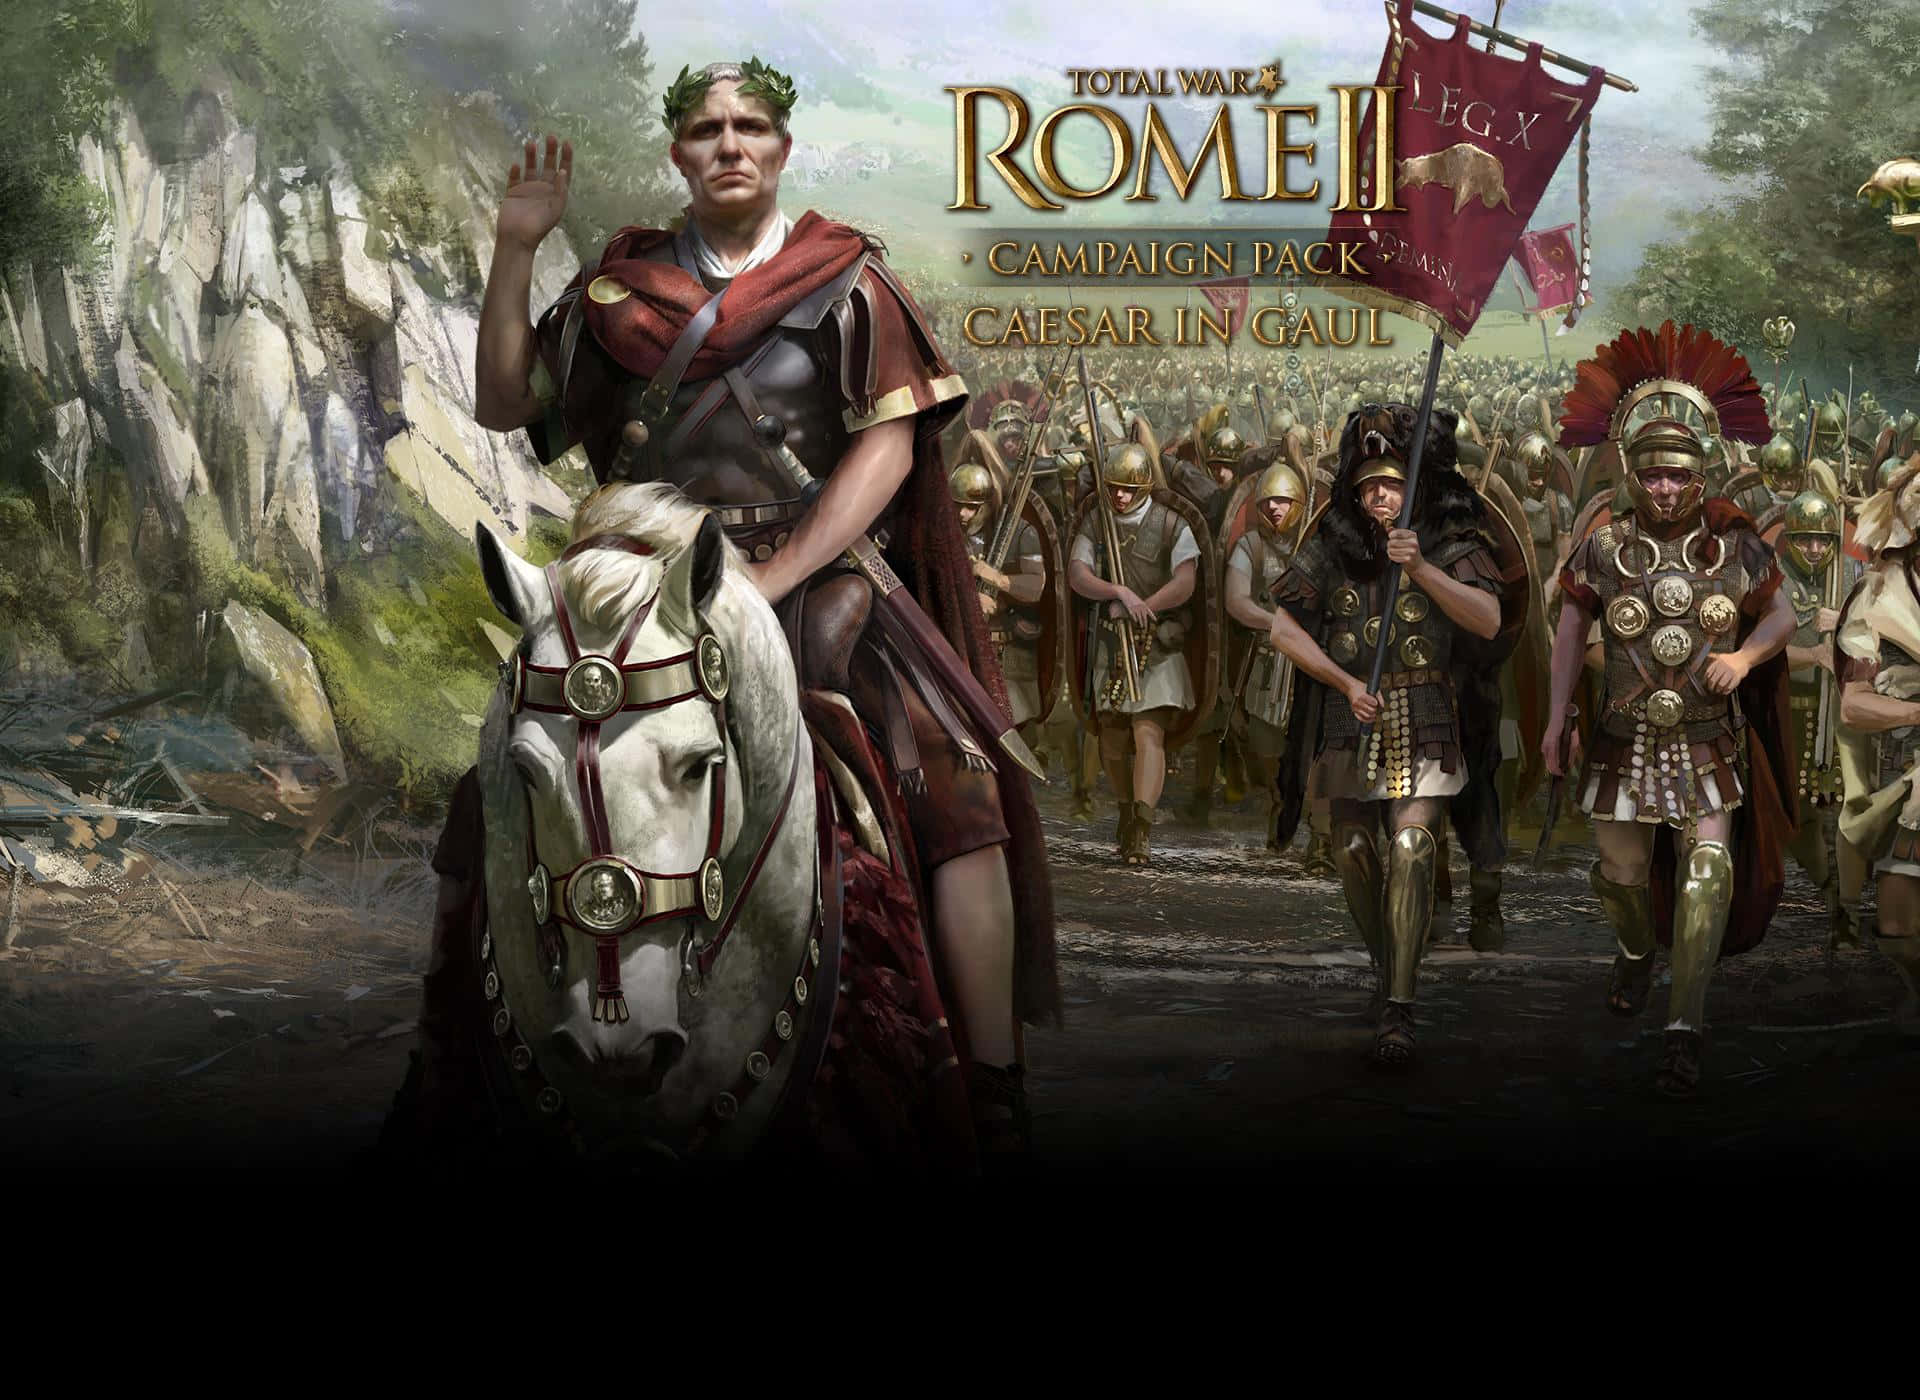 Majestic View of Total War Rome 2 Battle Scene